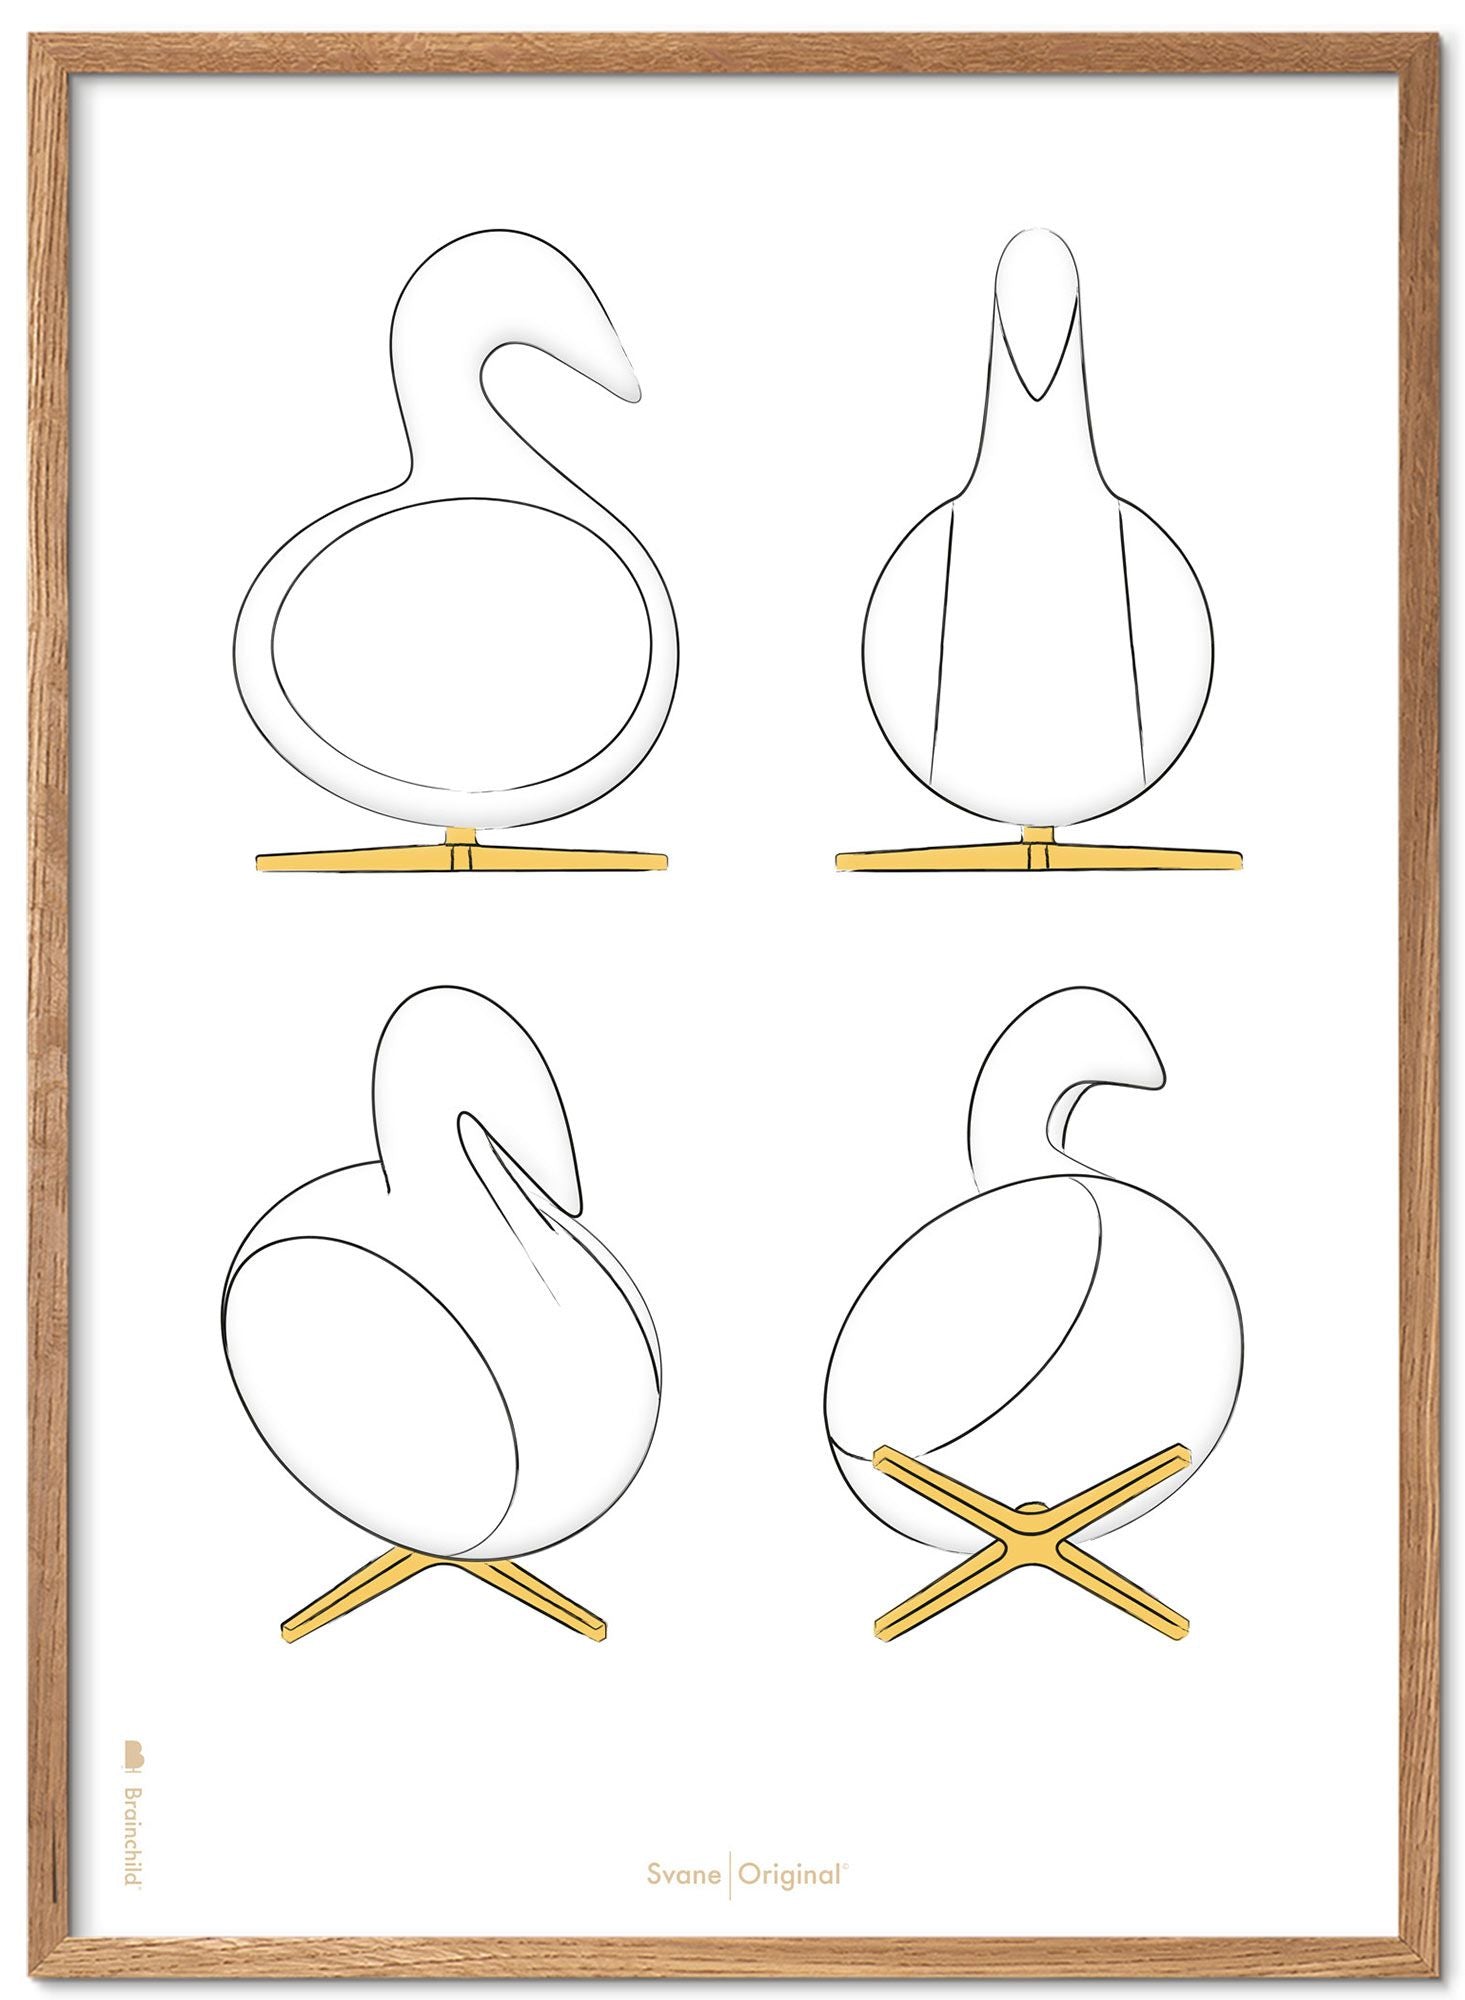 Brainchild Swan Design Sketches Poster Frame Made Of Light Wood 30x40 Cm, White Background